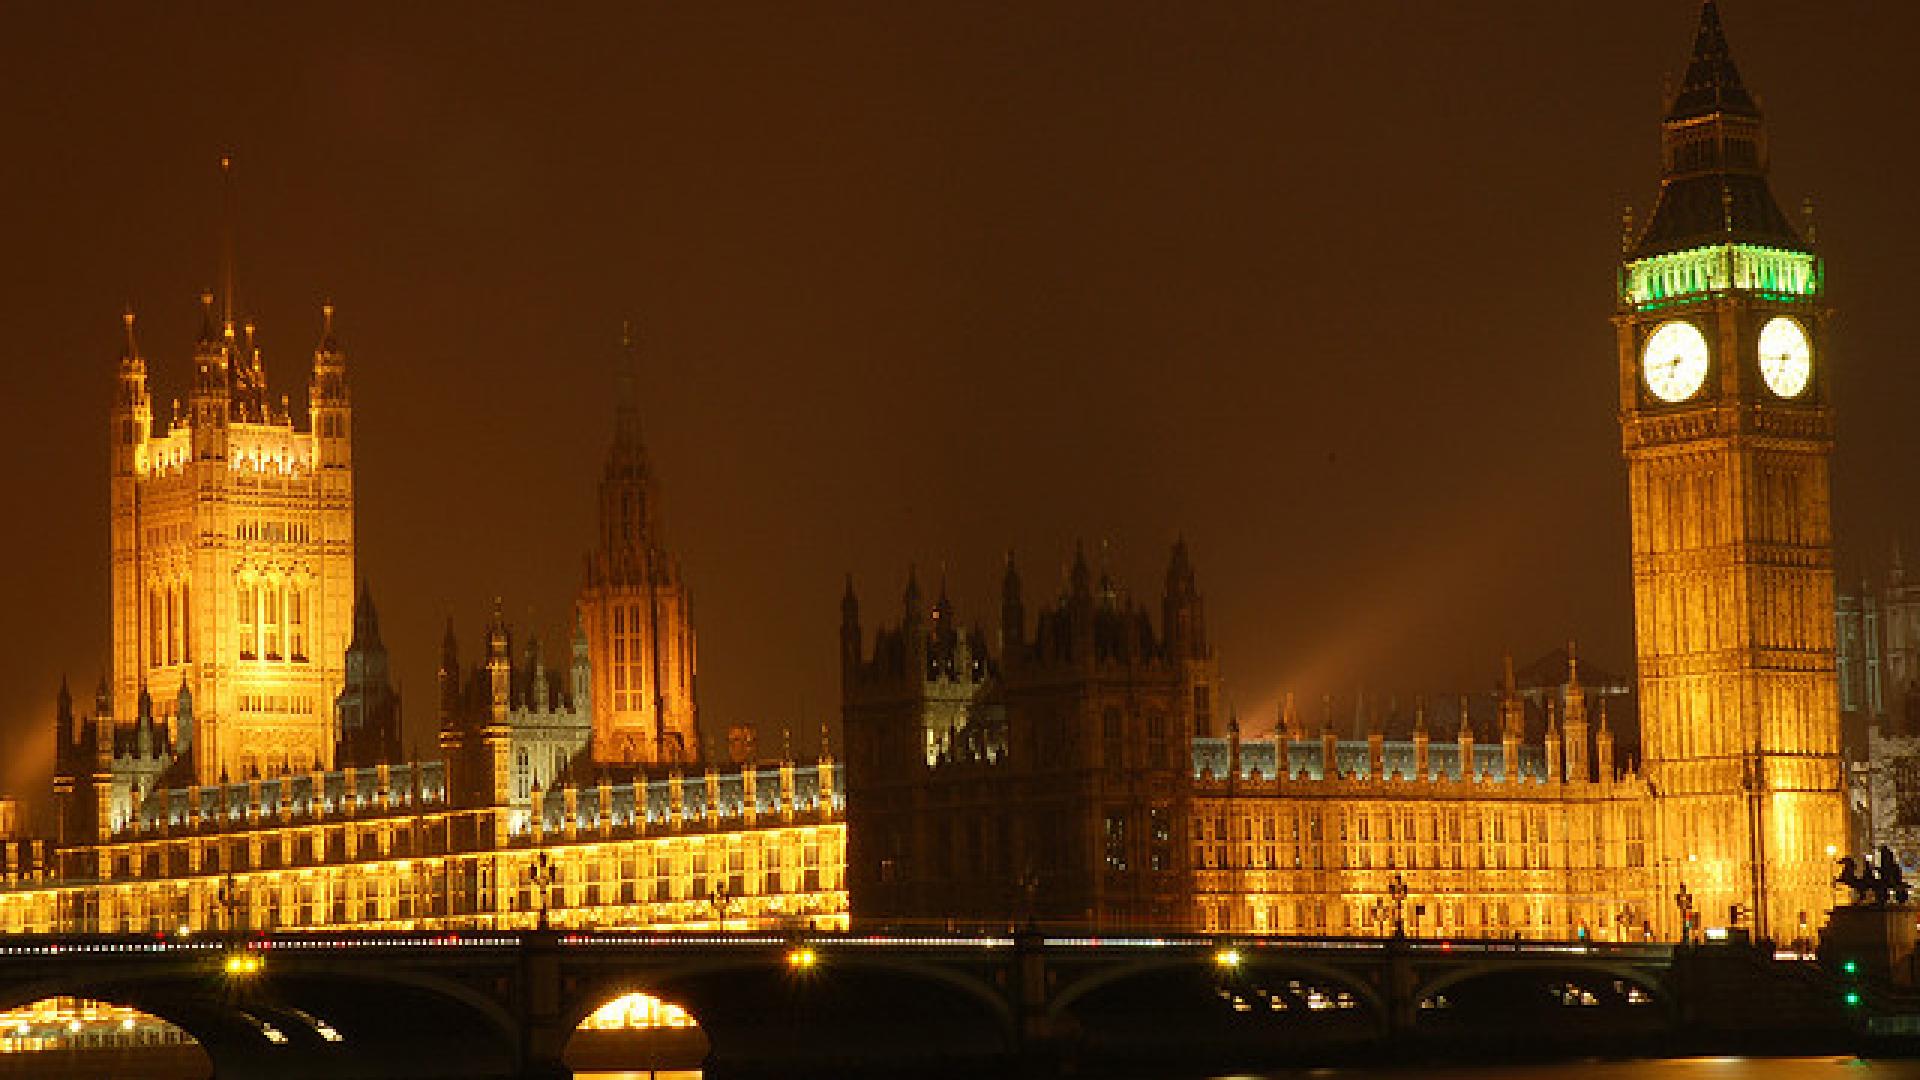 Parliament at night